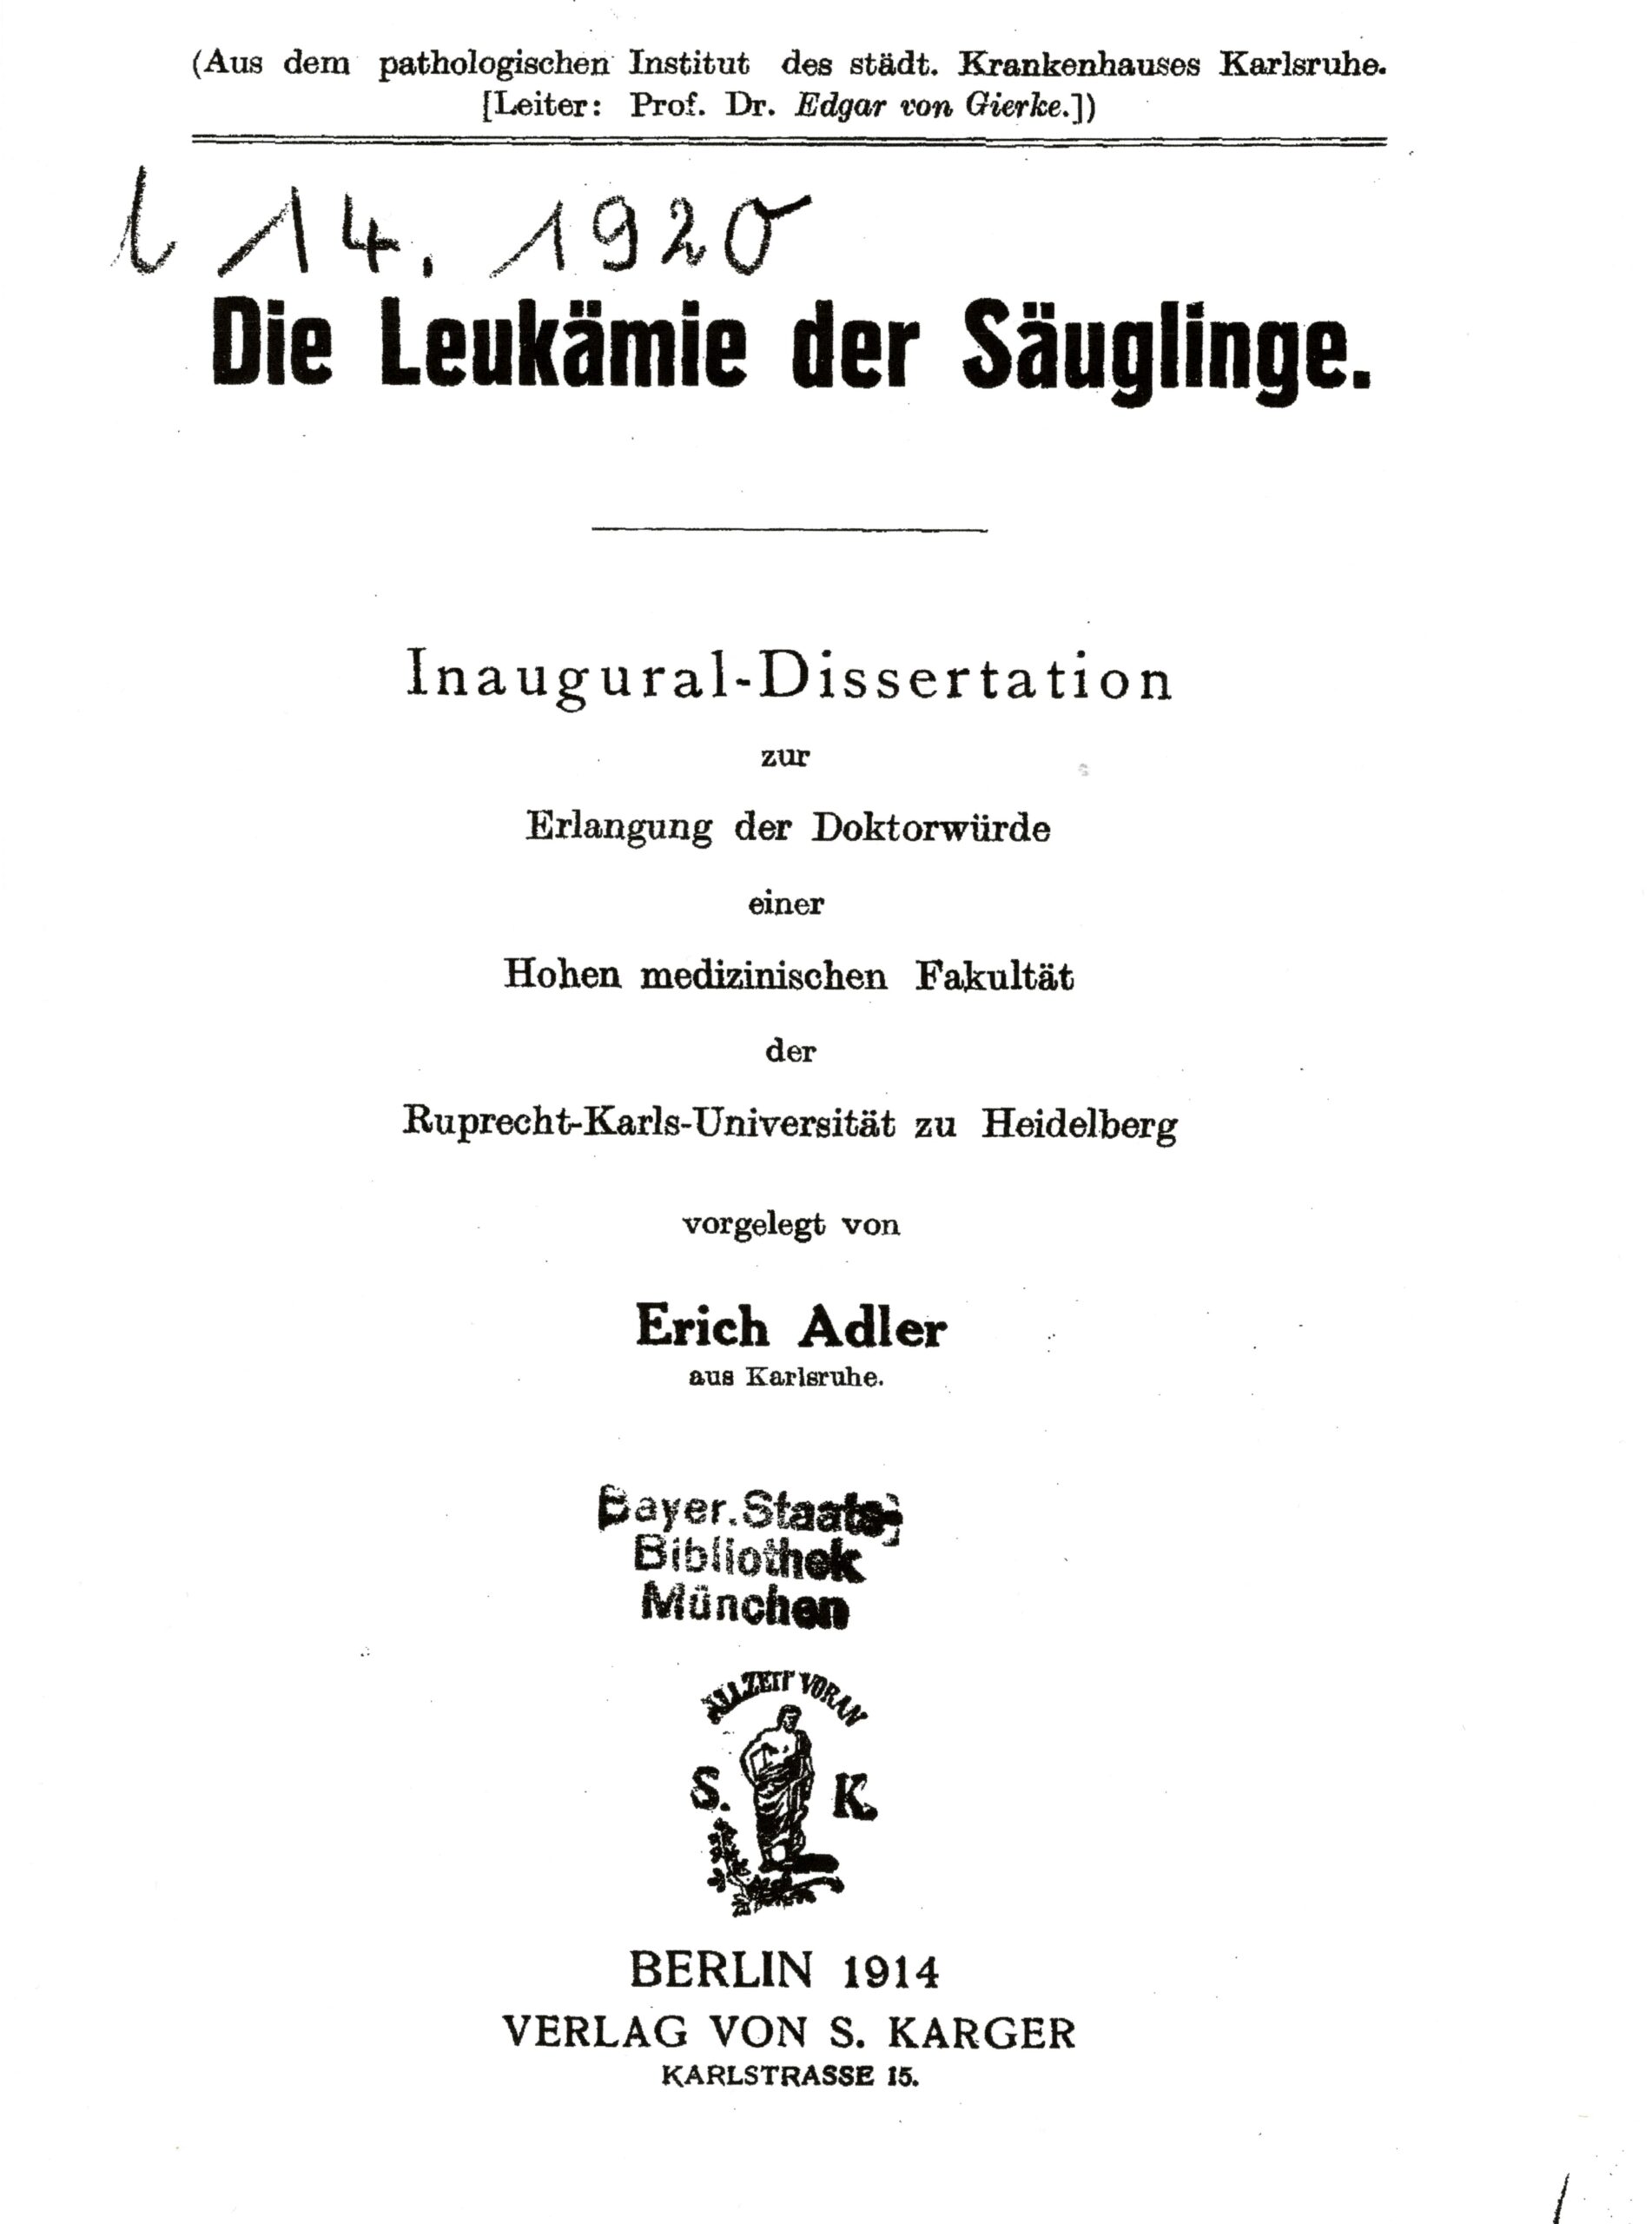 Dissertation, Heidelberg 1914